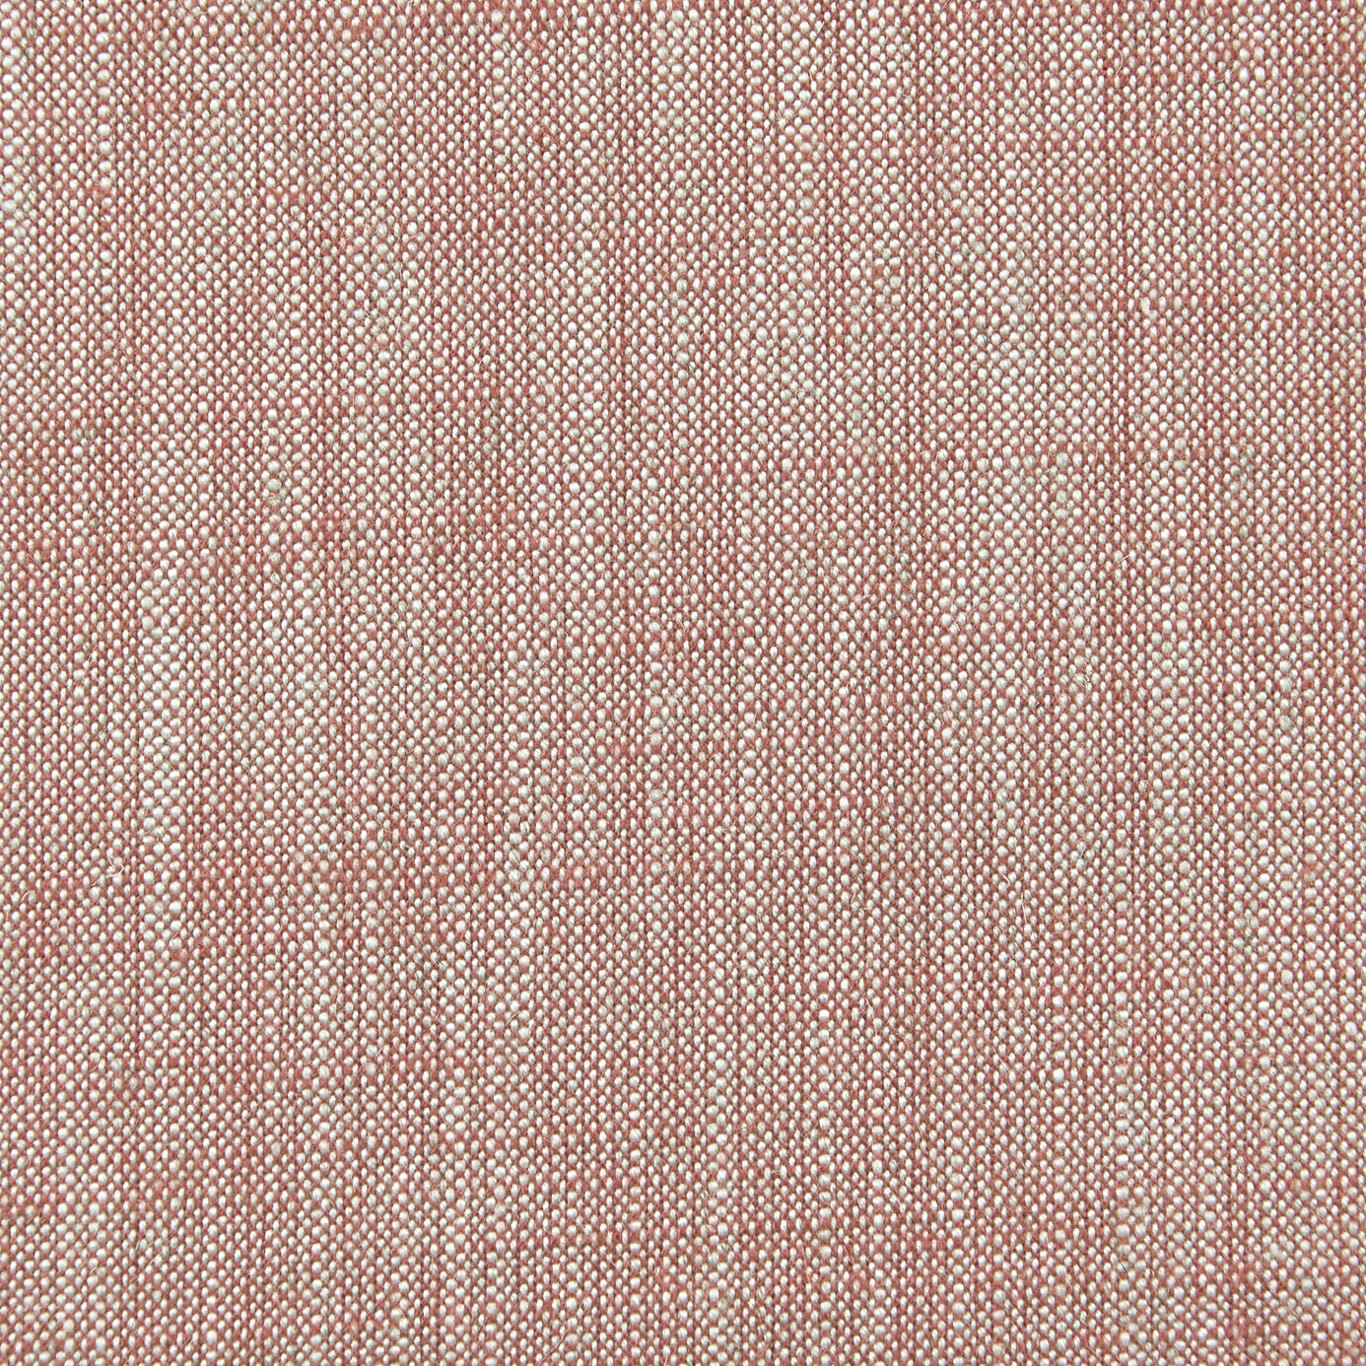 Biarritz Geranium Fabric by CNC